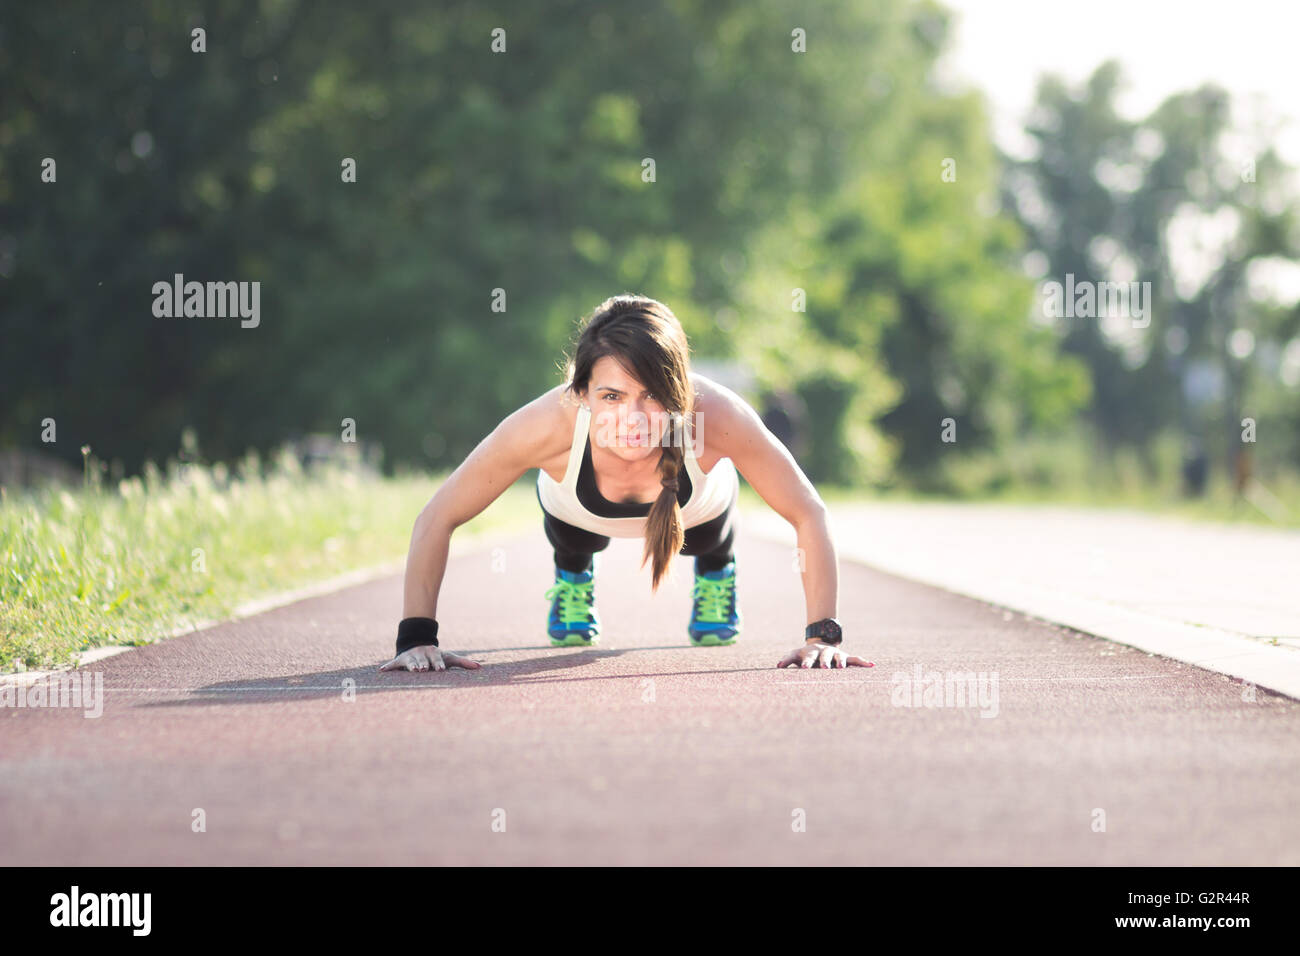 Girl push-up, outdoors, track. Stock Photo